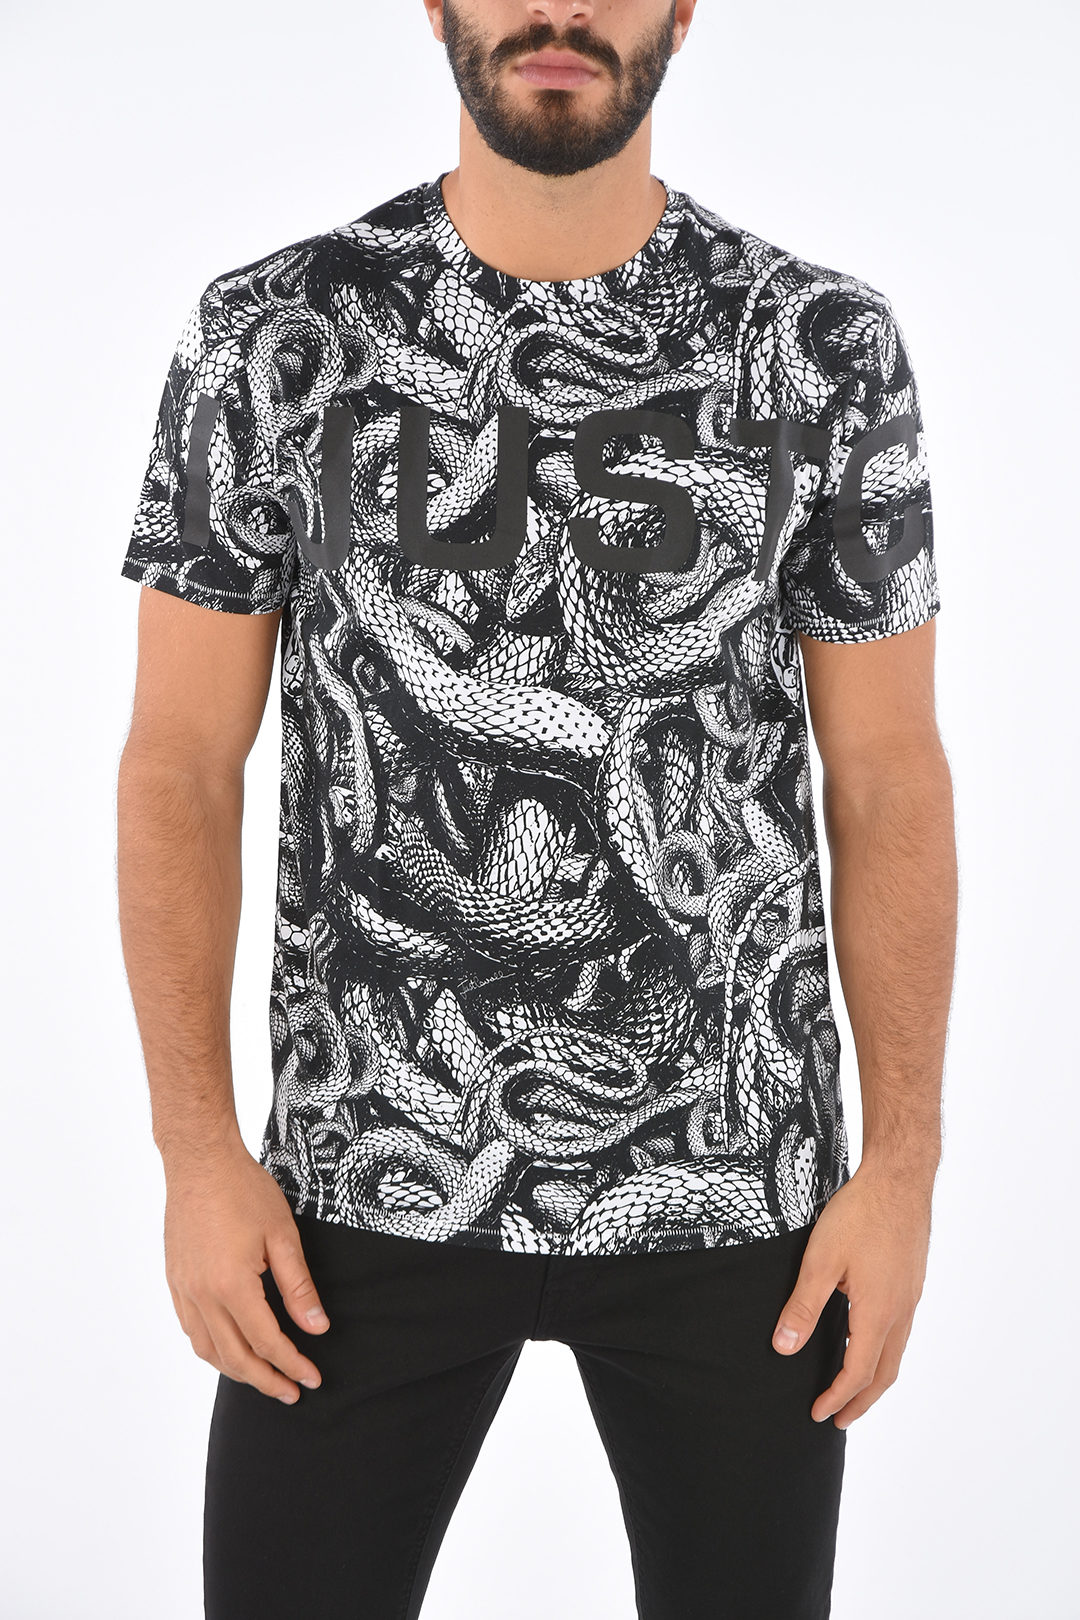 Just Cavalli Snake Printed T-Shirt men - Glamood Outlet